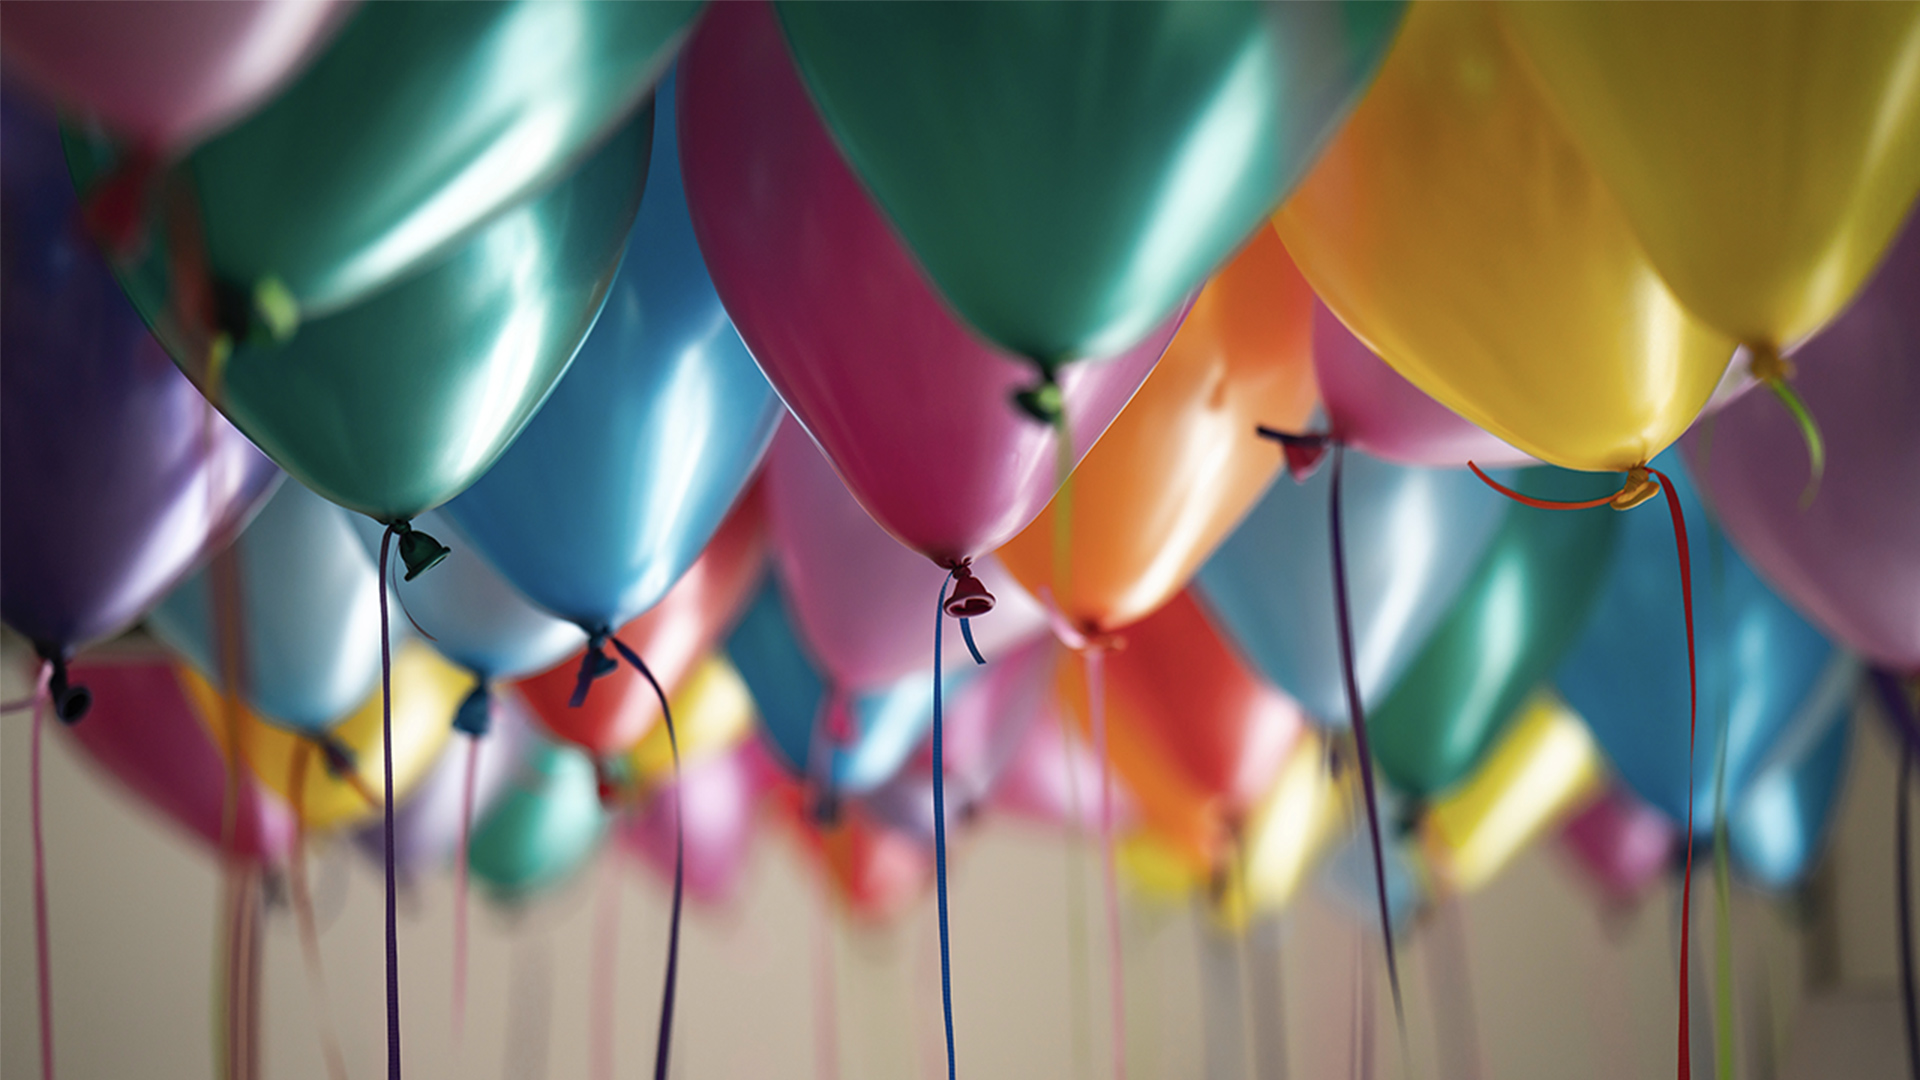 Multicoloured helium balloons floating